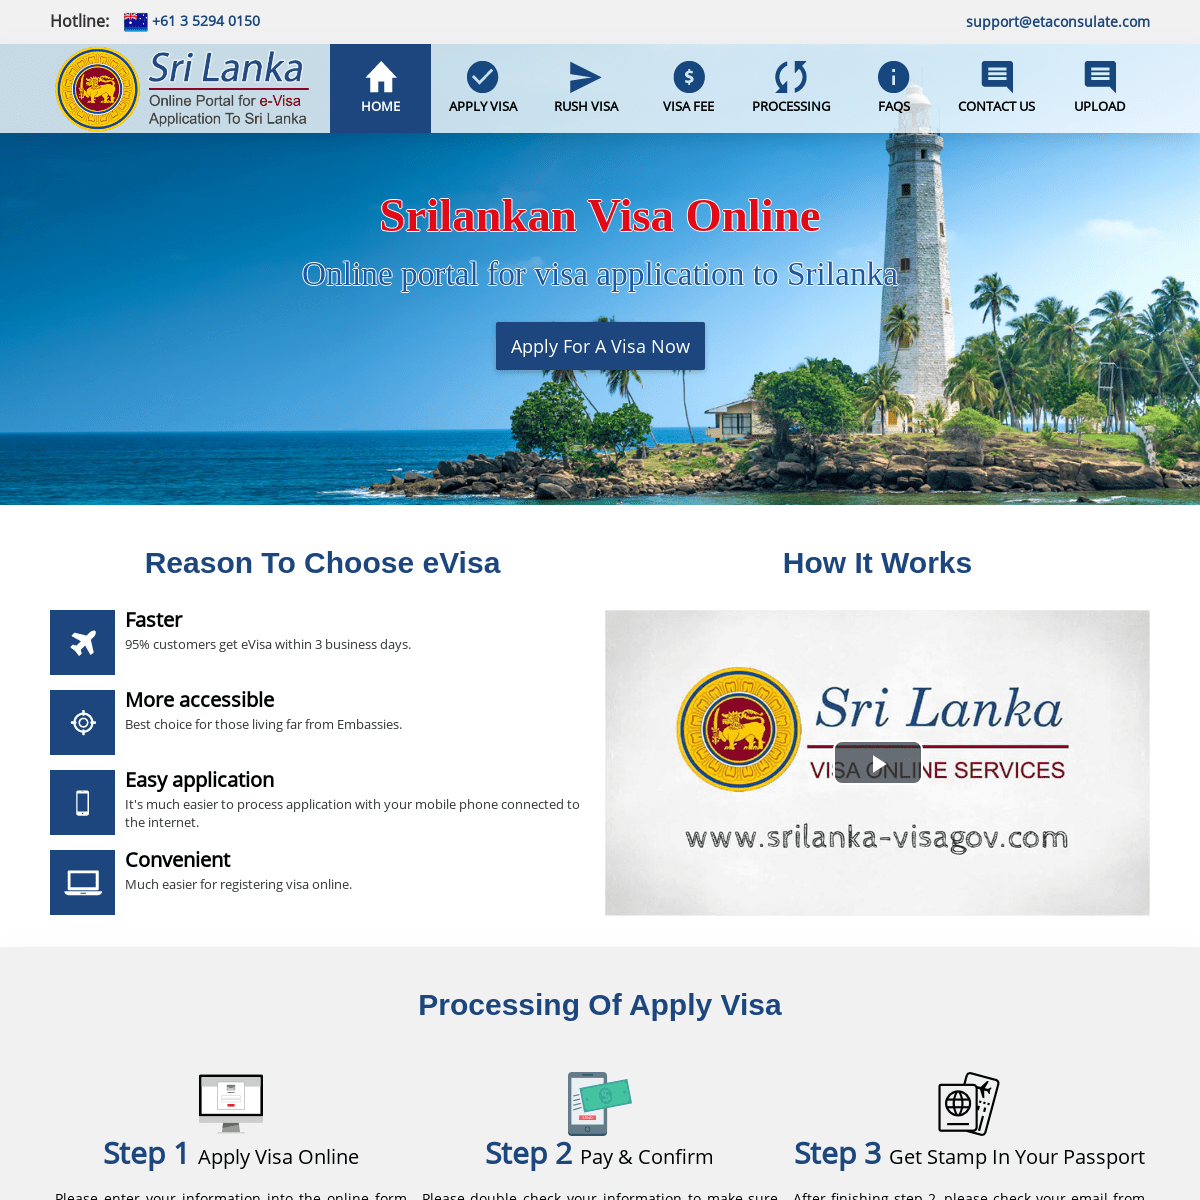 A complete backup of srilanka-visagov.com